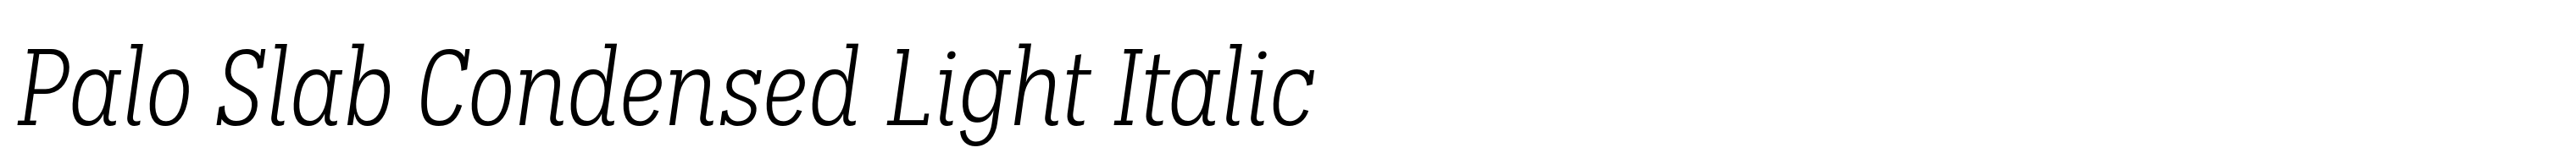 Palo Slab Condensed Light Italic